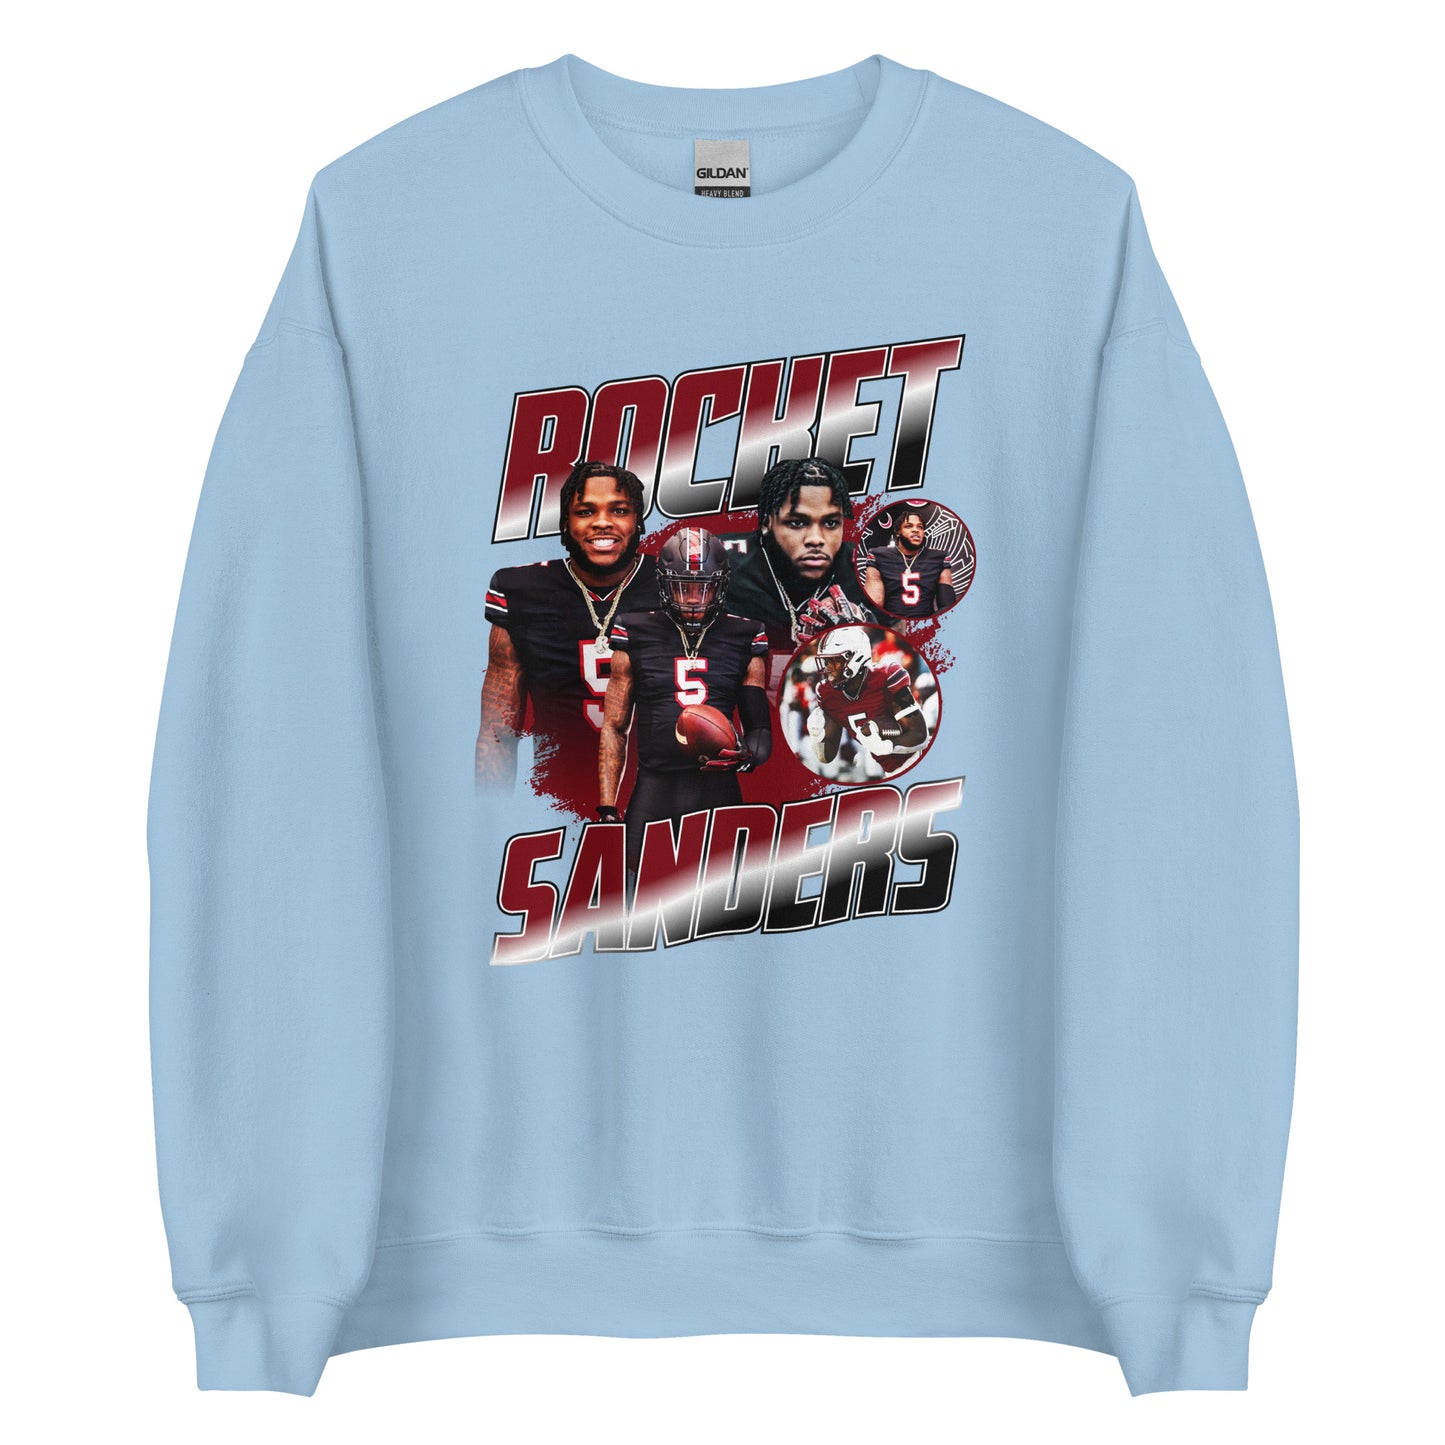 Raheim Sanders "Vintage" Sweatshirt - Fan Arch